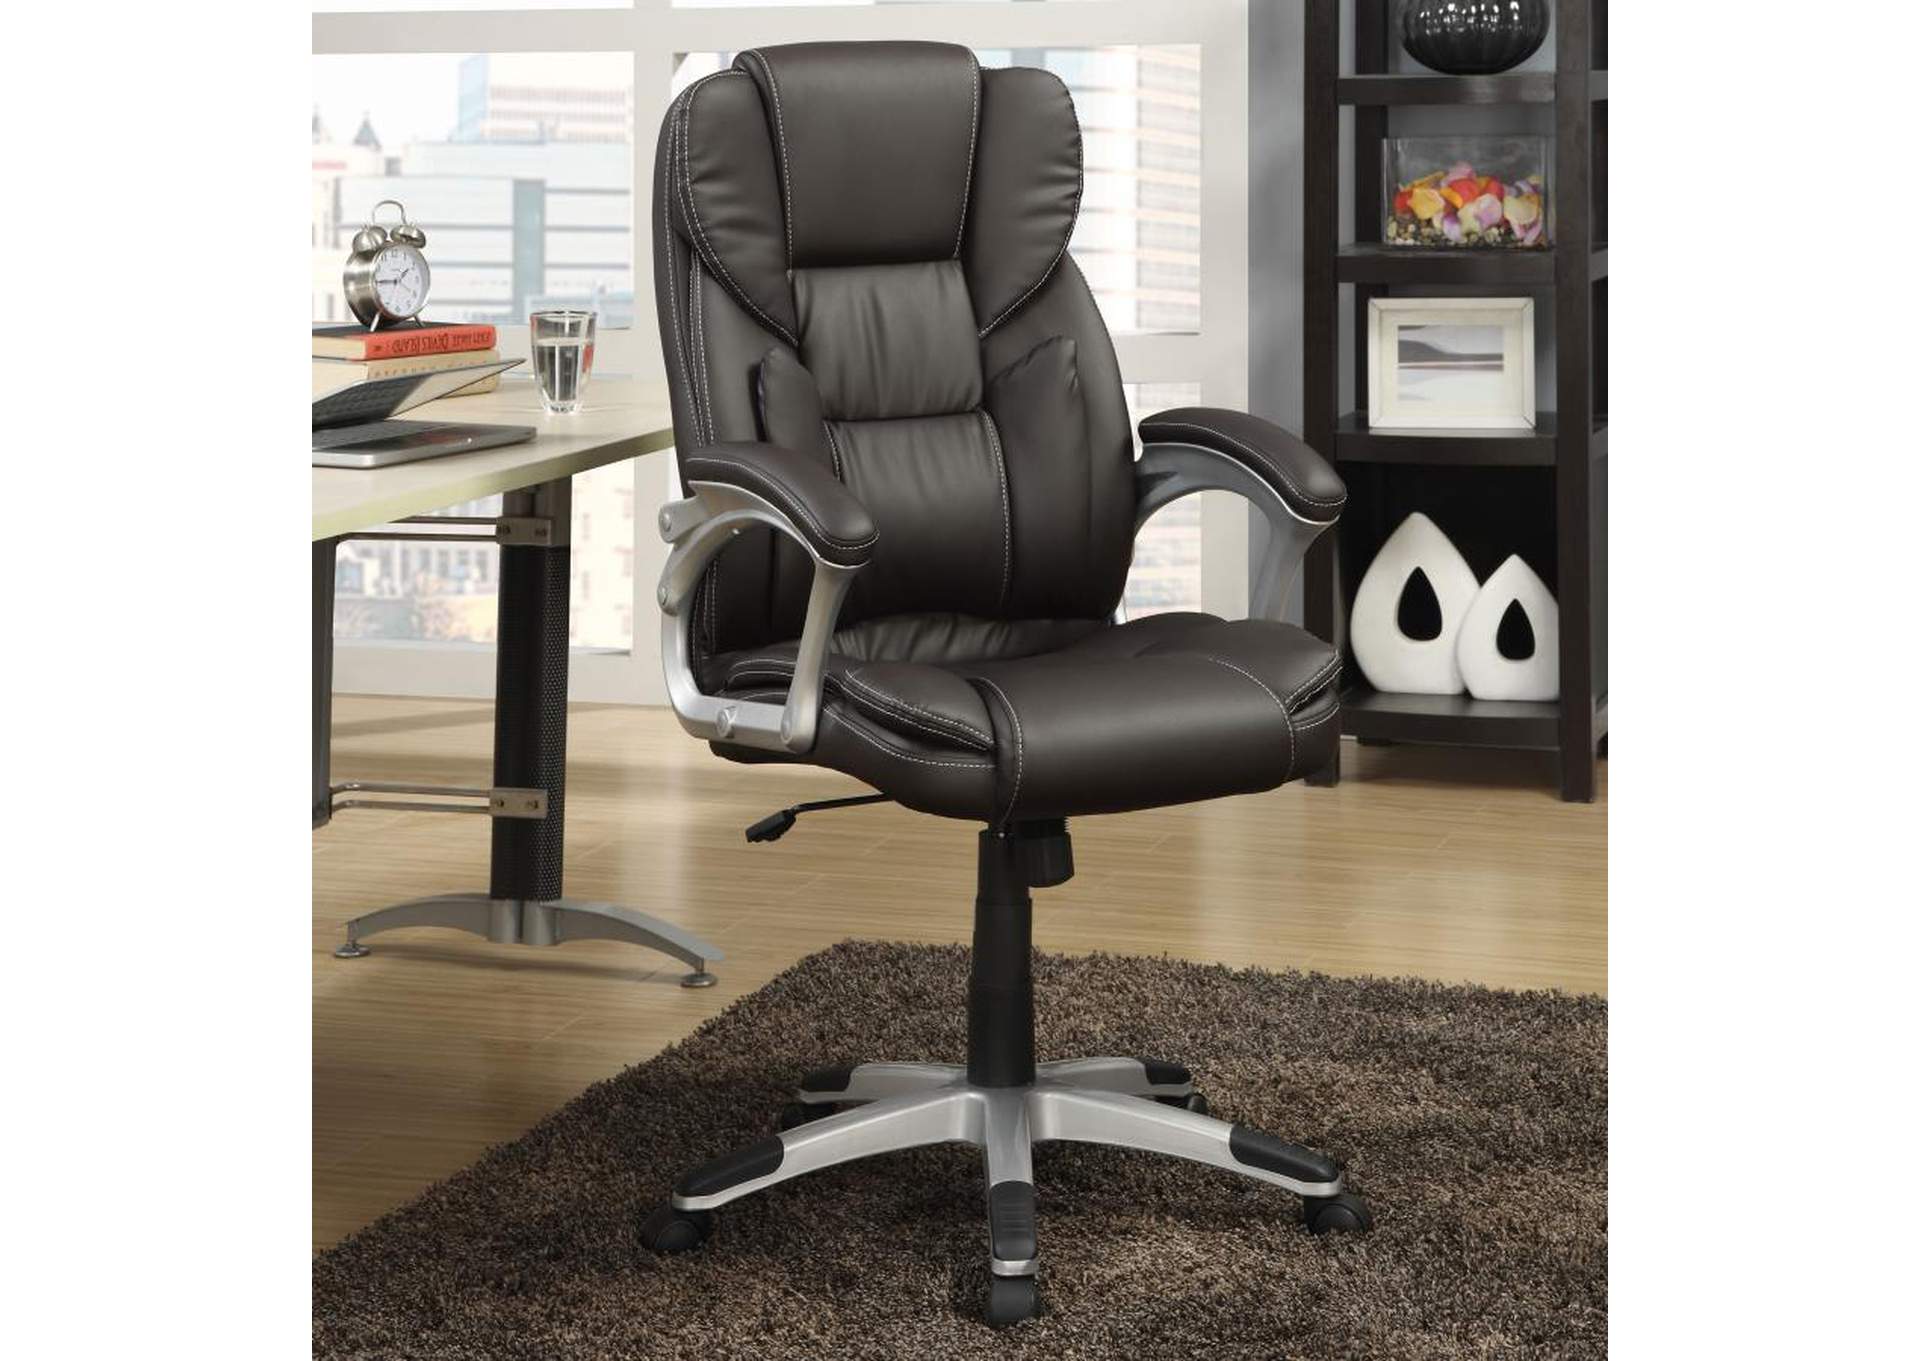 Kaffir Adjustable Height Office Chair Dark Brown and Silver,Coaster Furniture